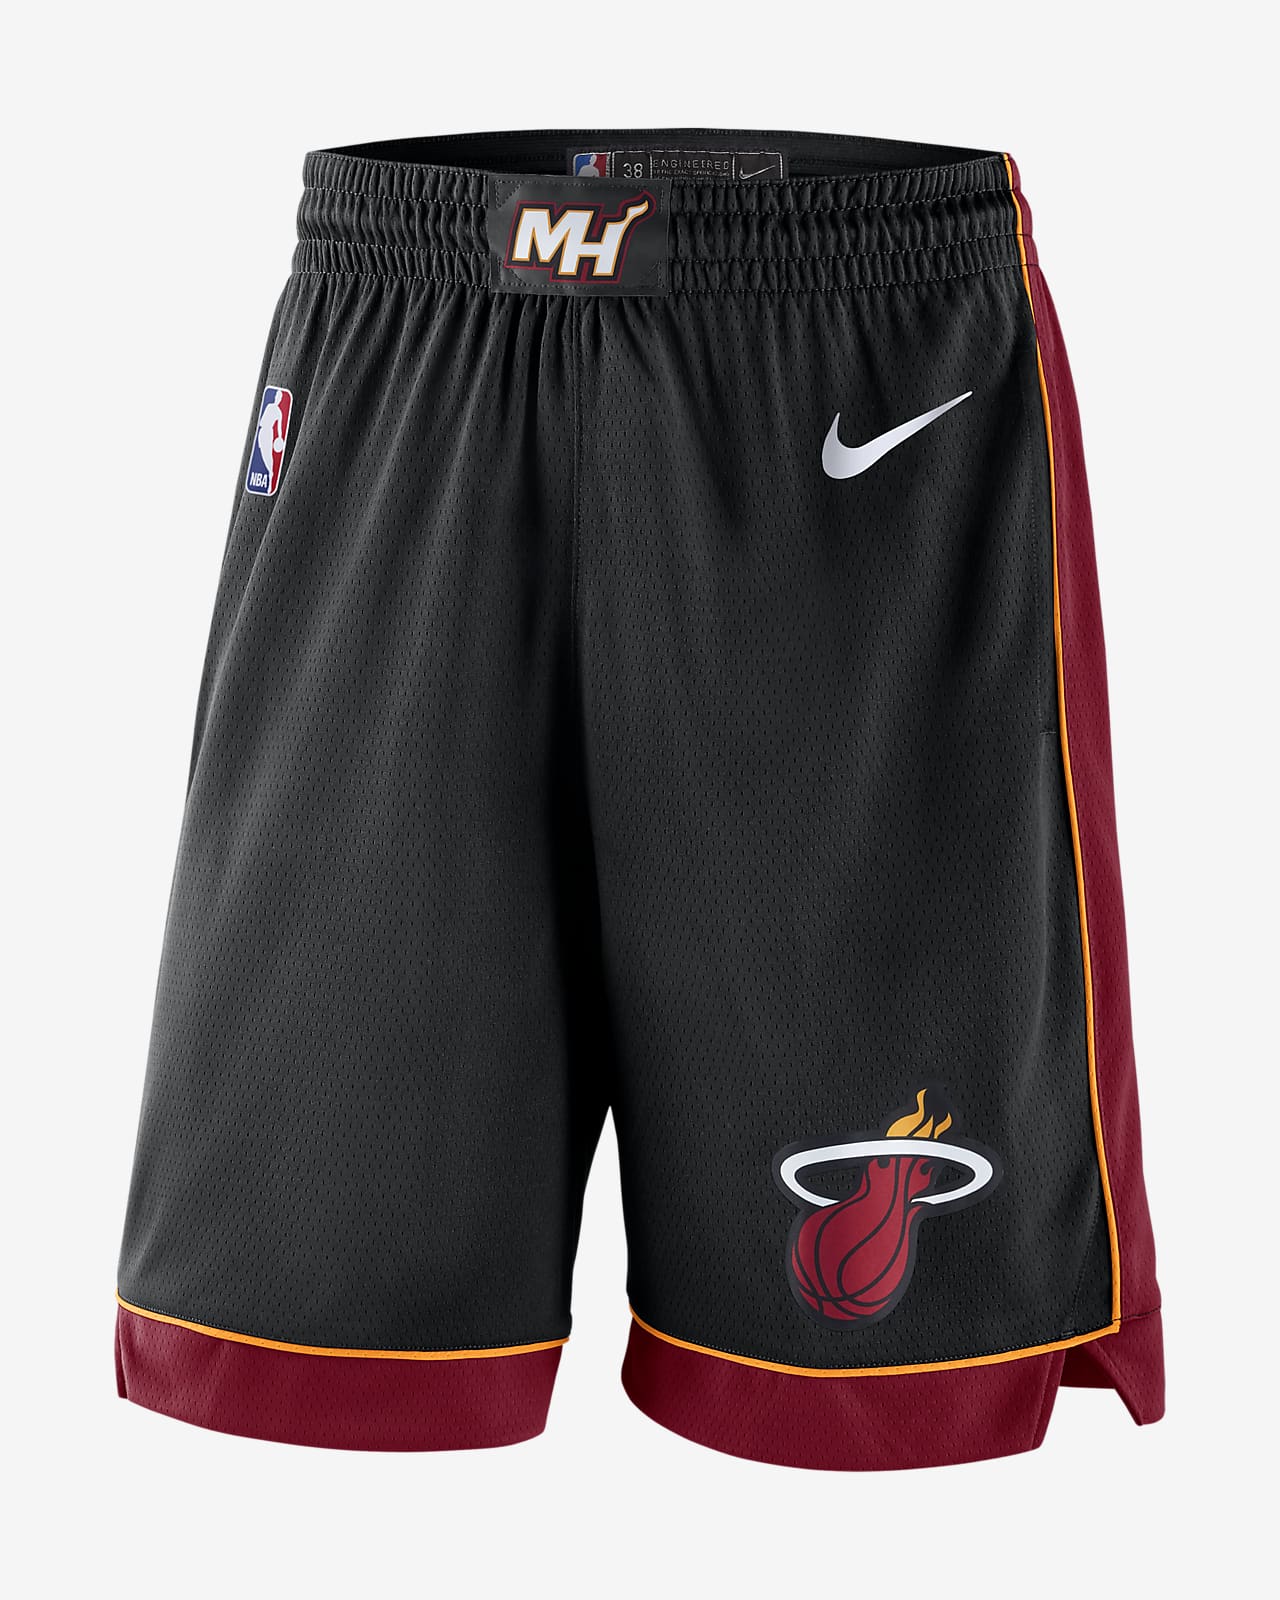 Retro Herren Miami Heat Stitched Basketball Swingman Shorts Sports S-2XL 